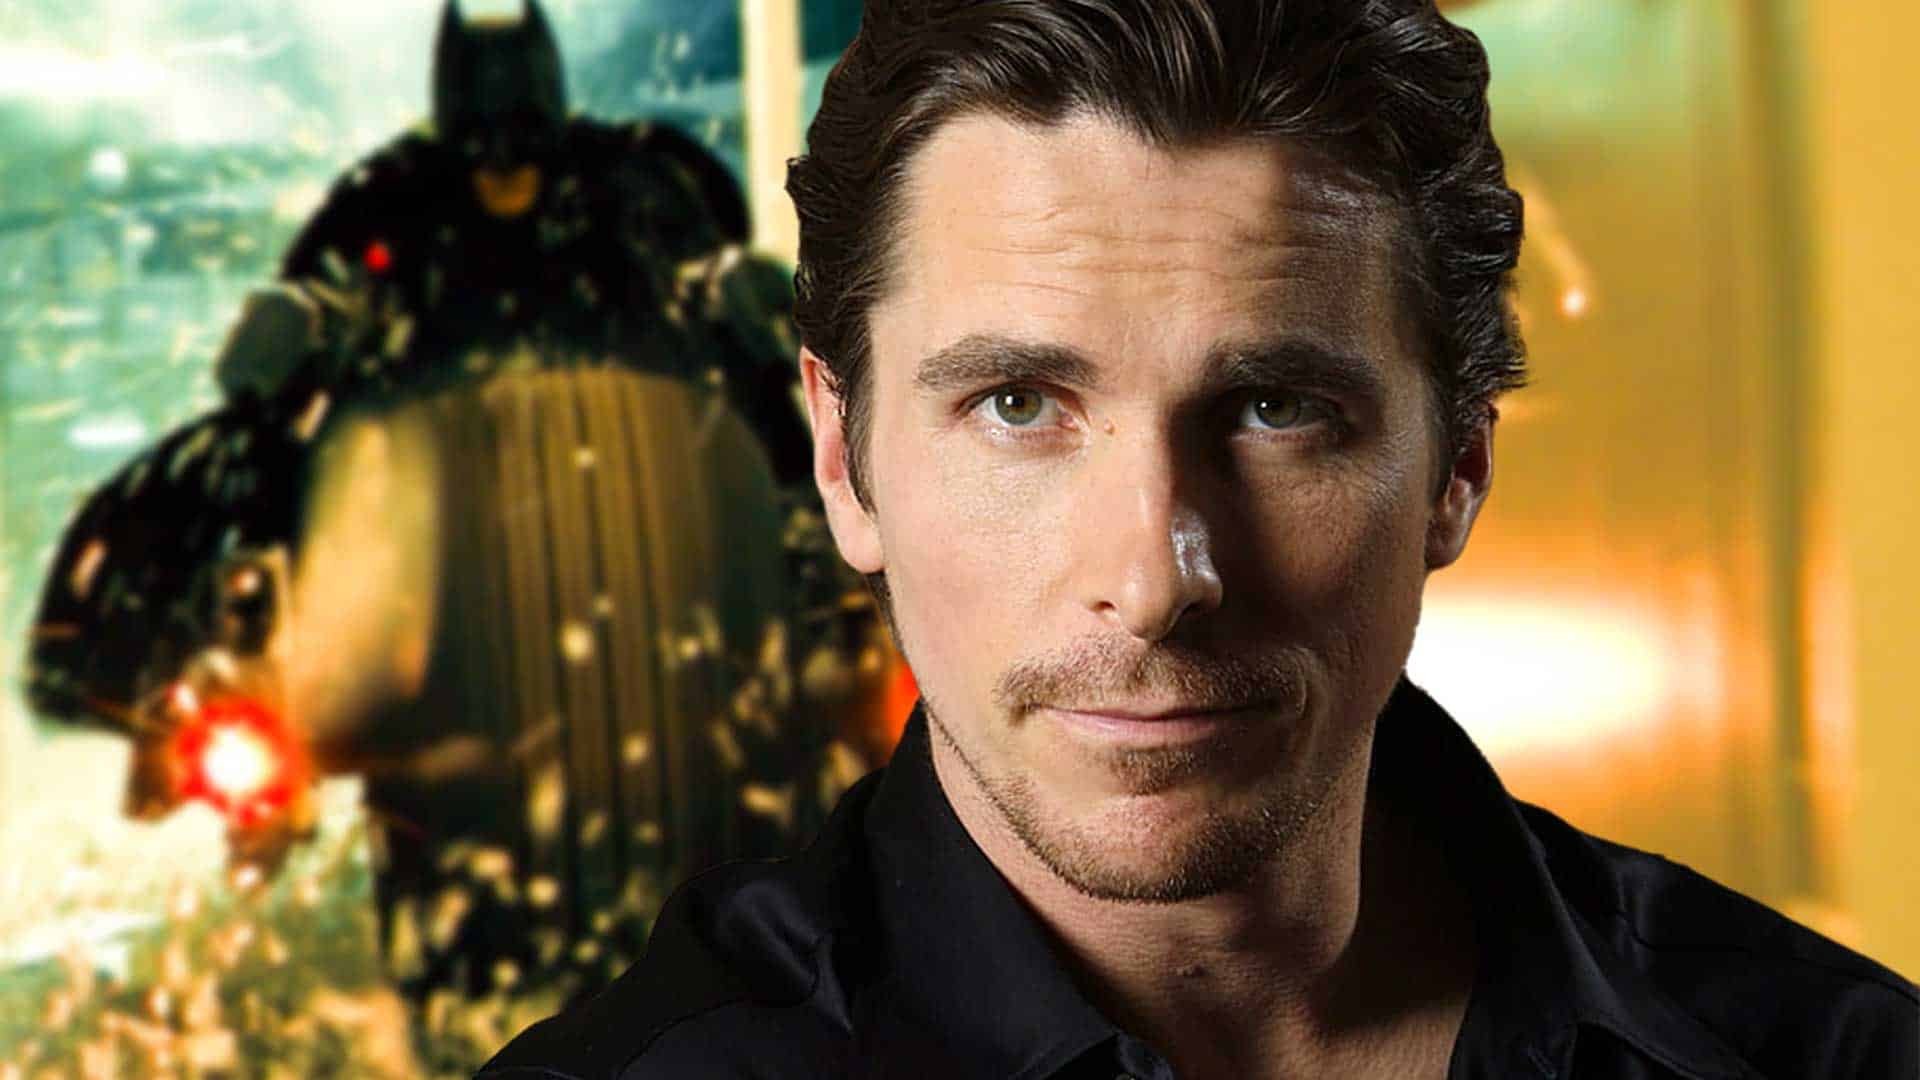 The Dark Knight 4: How Christian Bale's Batman Can Return